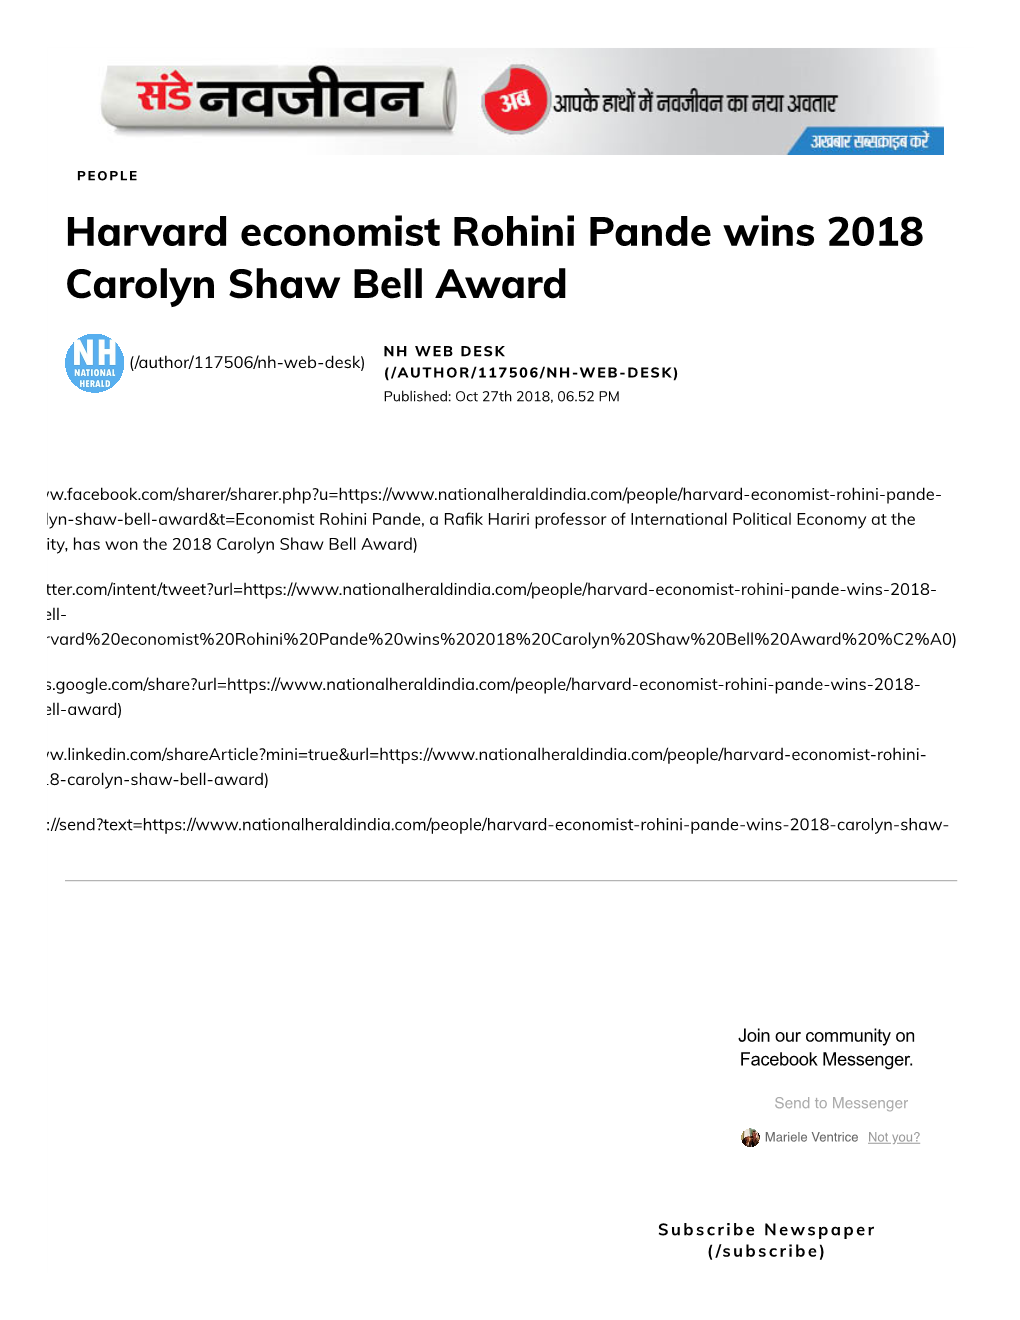 Harvard Economist Rohini Pande Wins 2018 Carolyn Shaw Bell Award